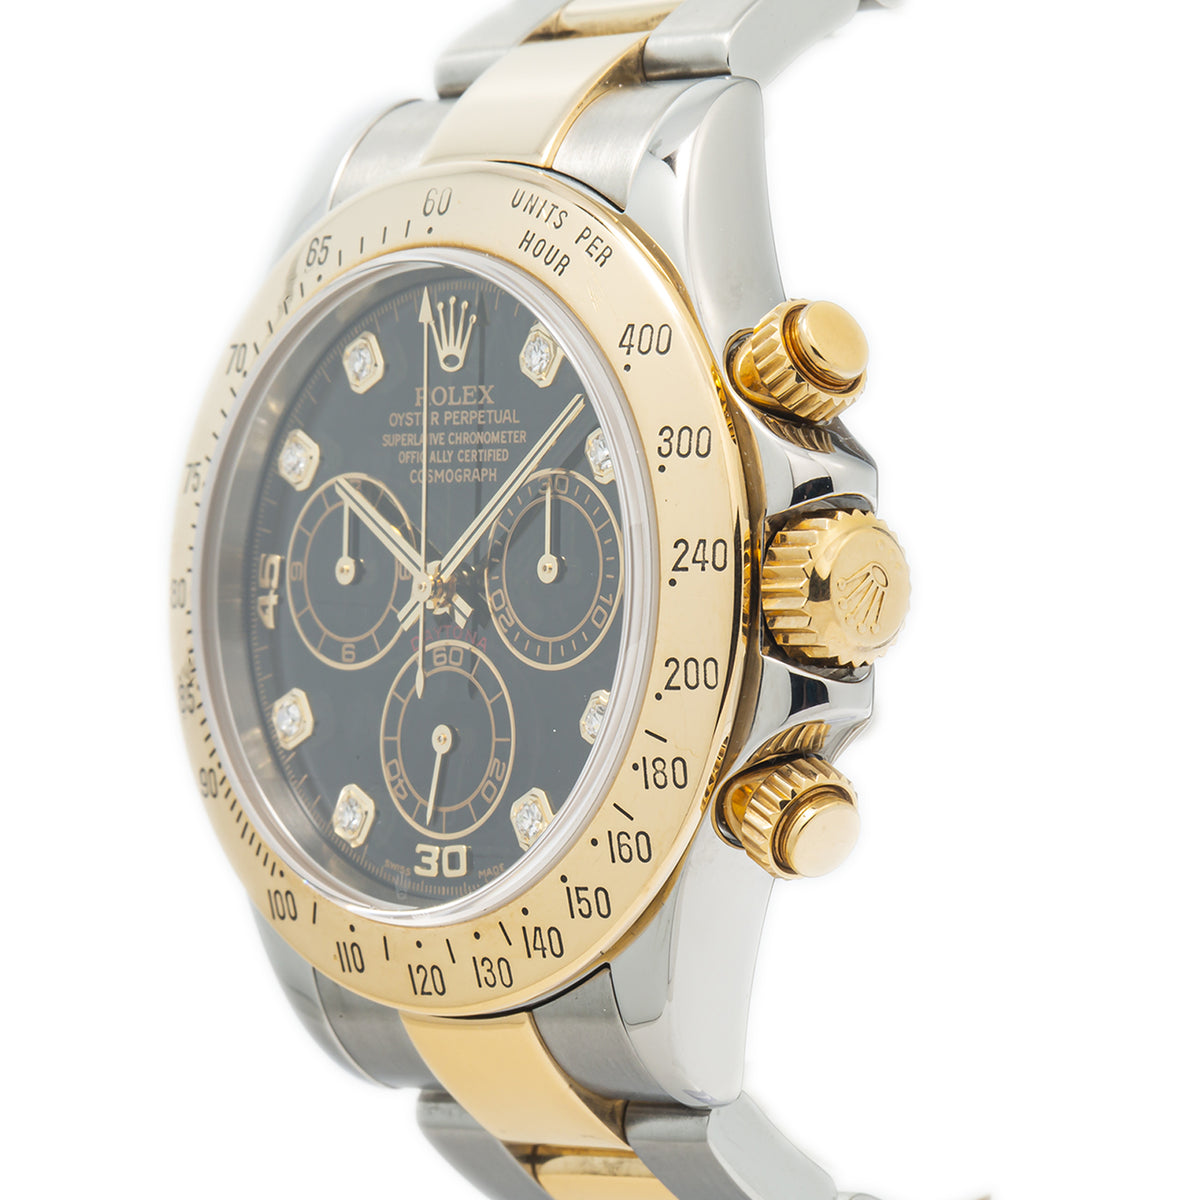 Rolex Daytona 116523G 18k Gold Steel Black Factory Diamond Dial Men's Watch 40mm